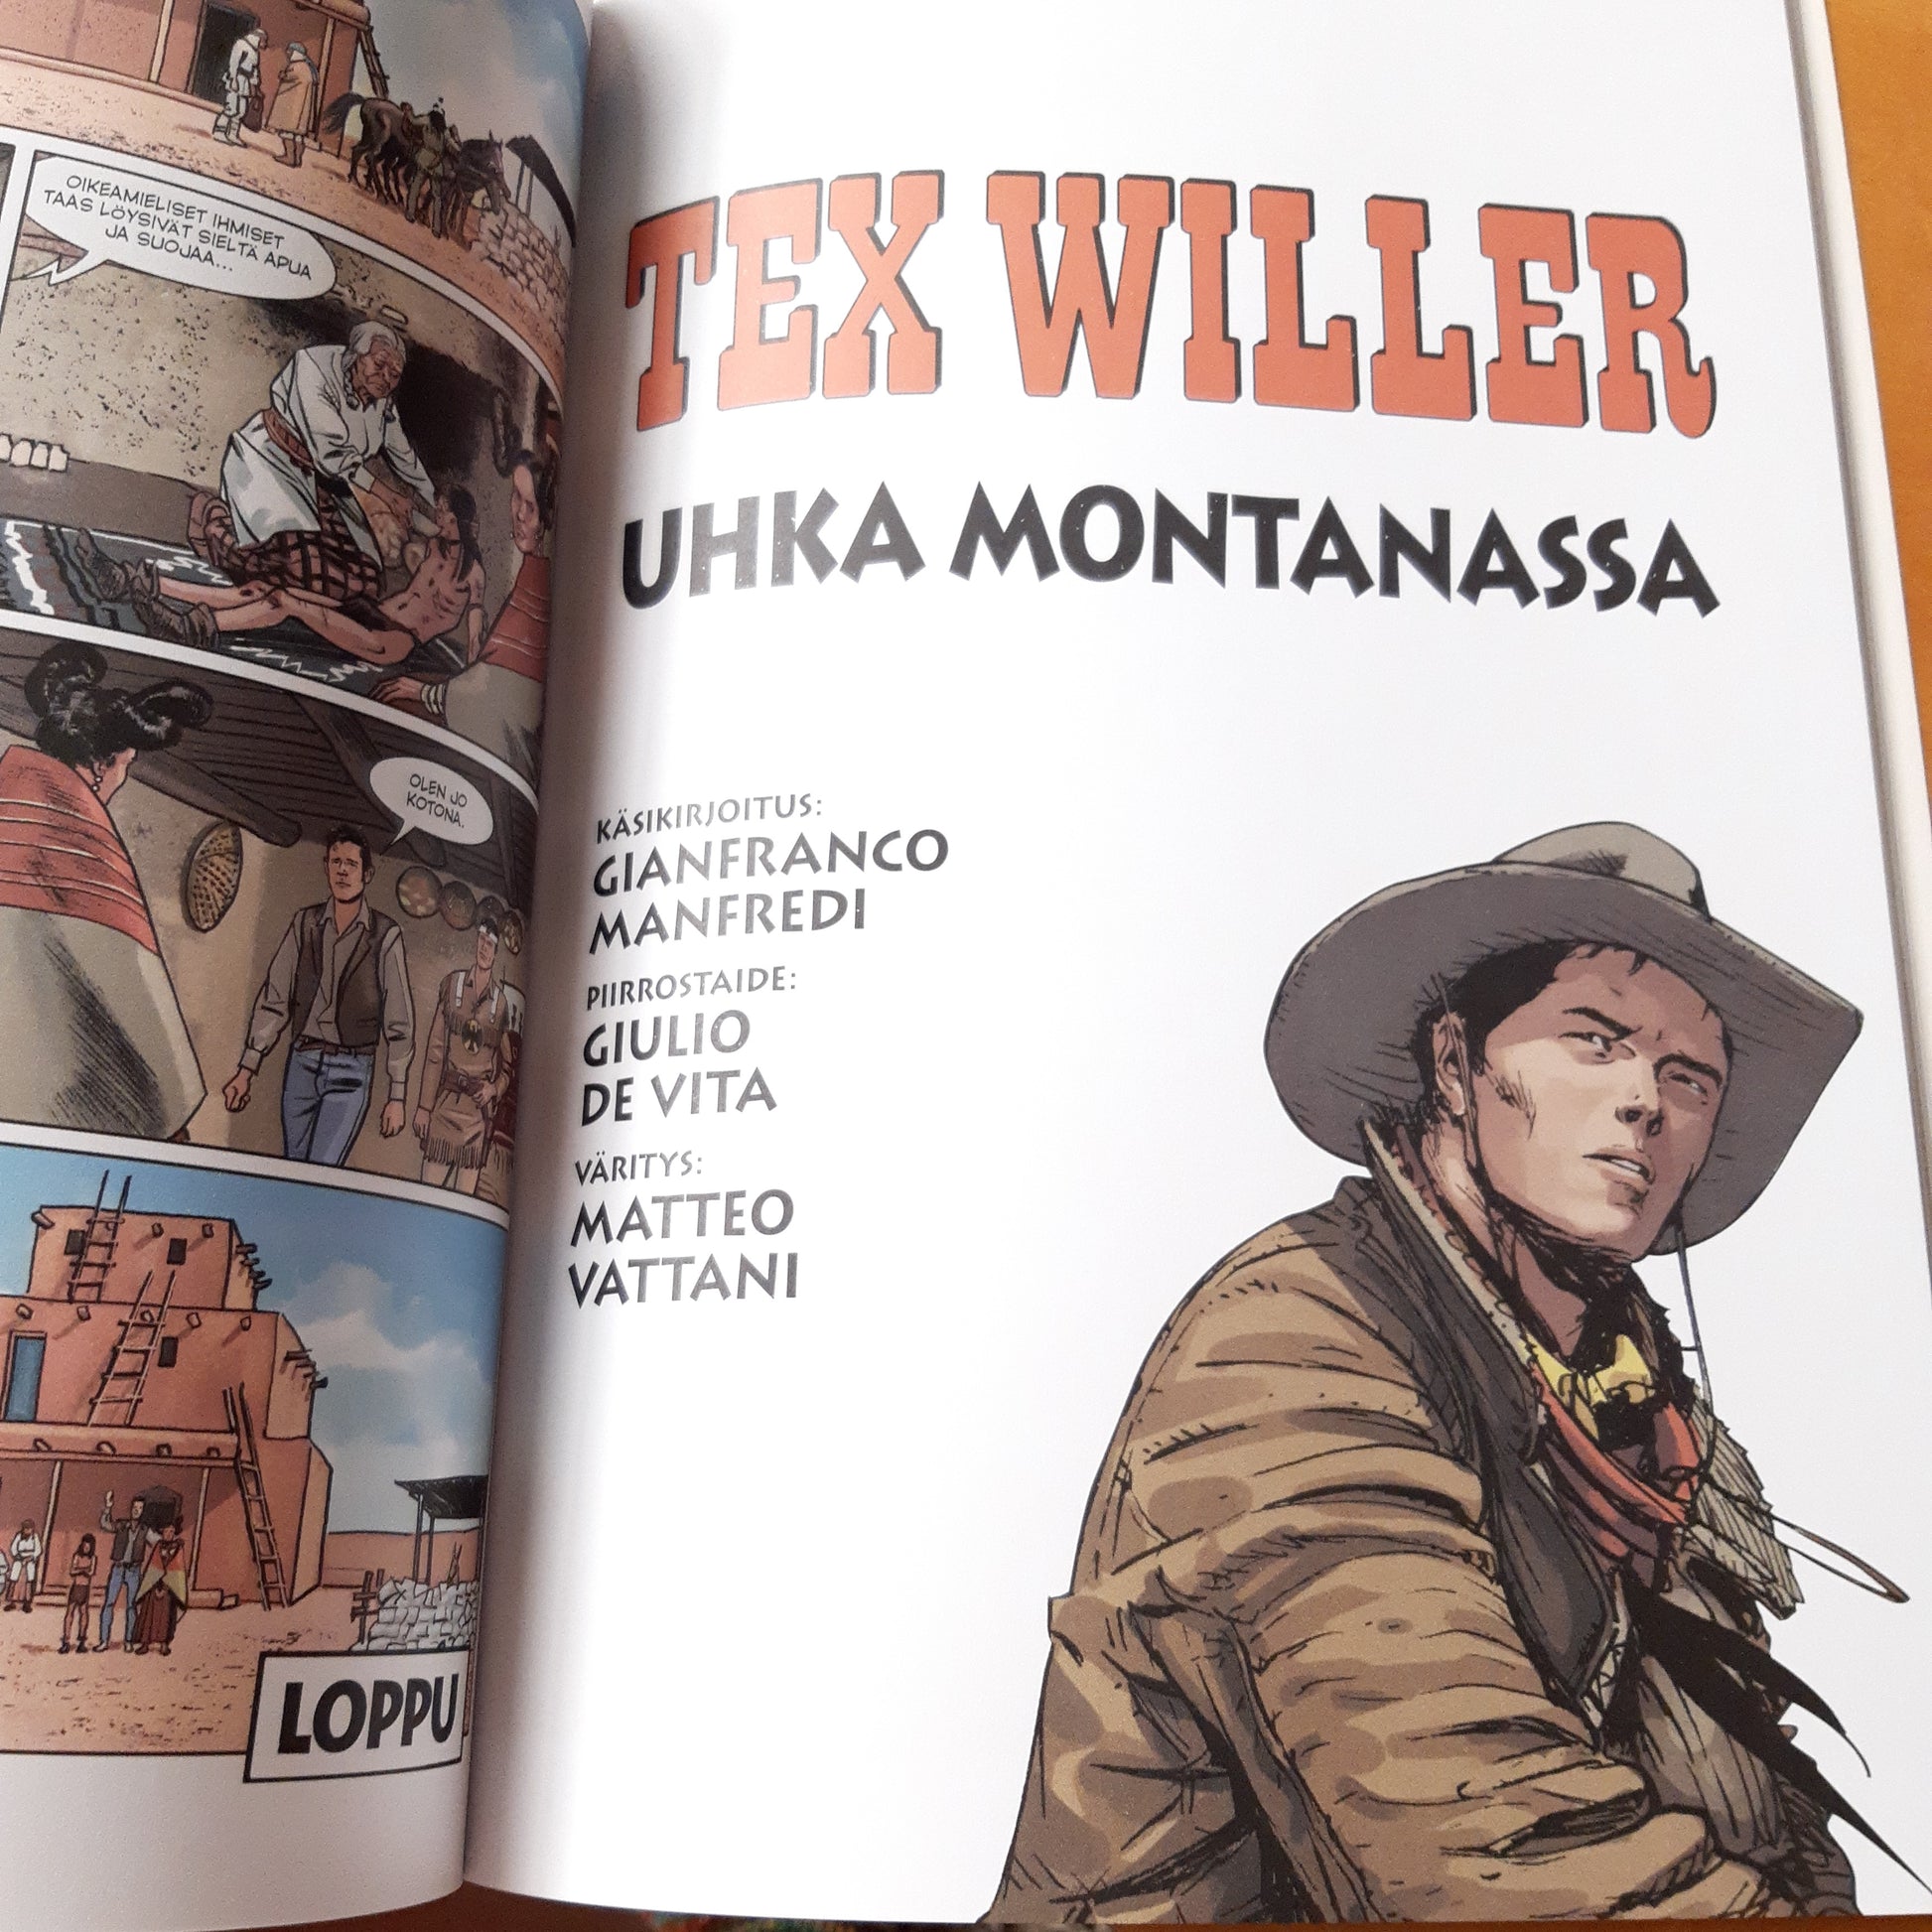 tex willer - painted desert ja uhka montanassa - suuralbumi 35